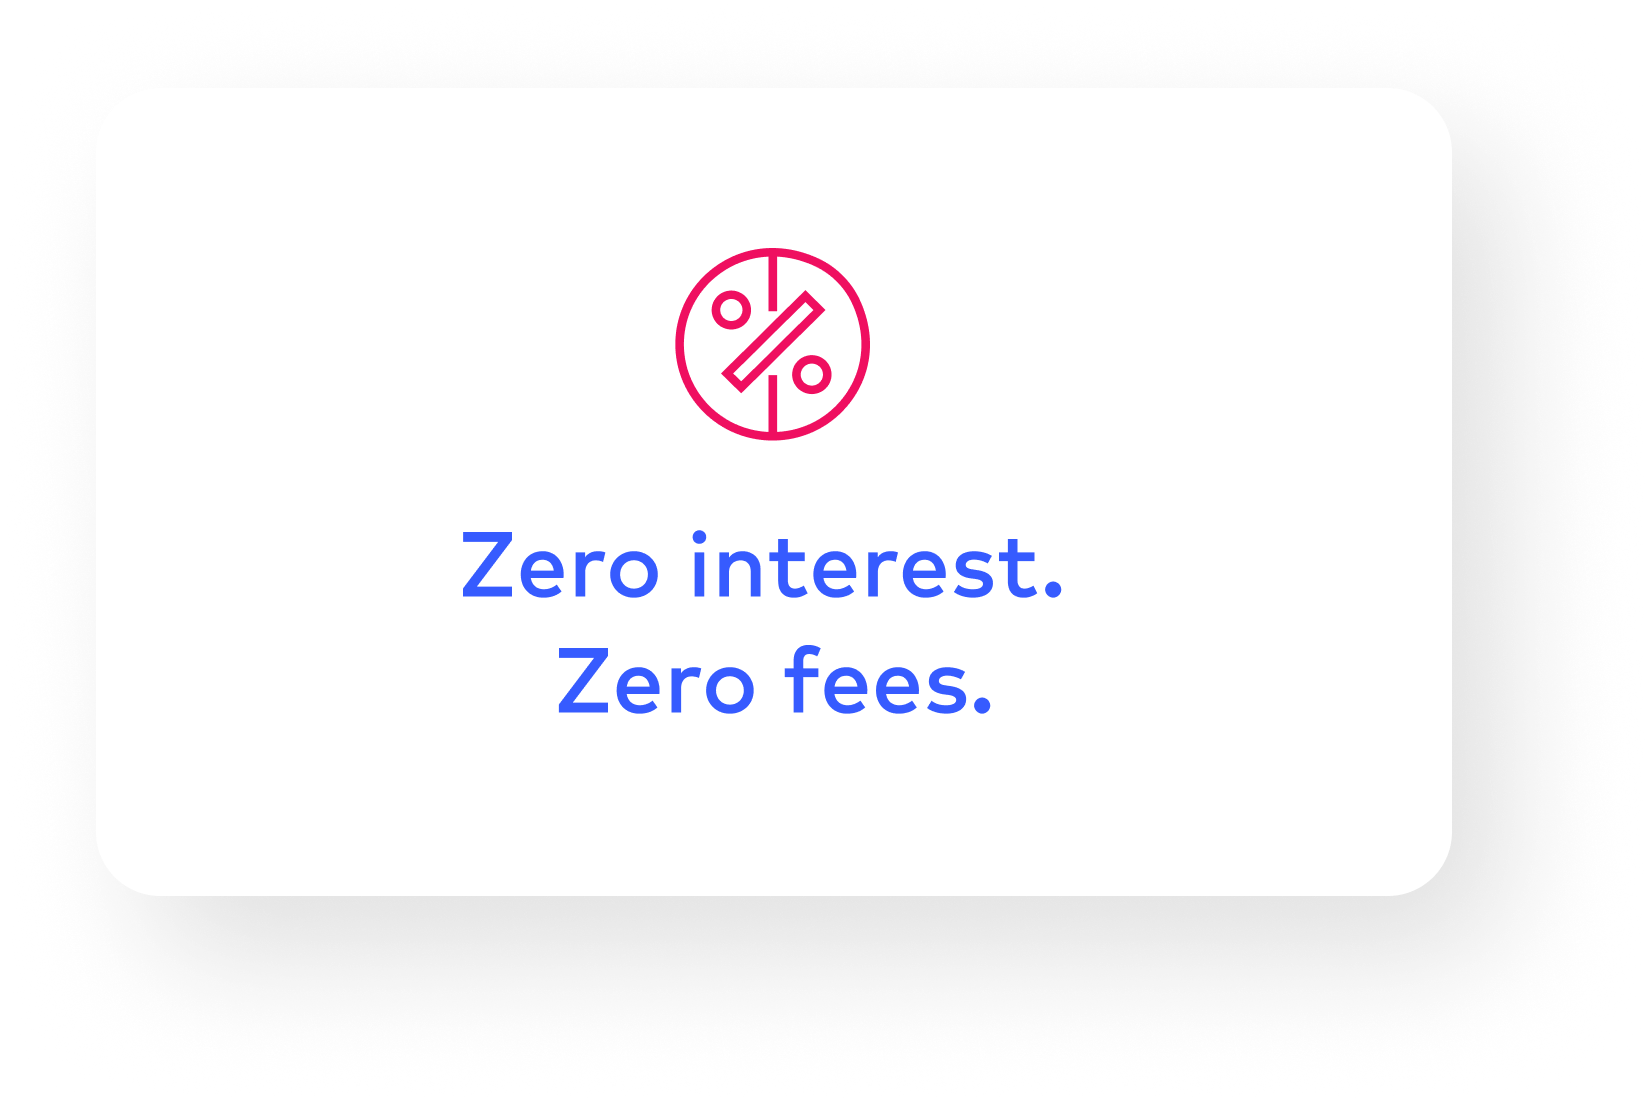 Zero interest. Zero fees.